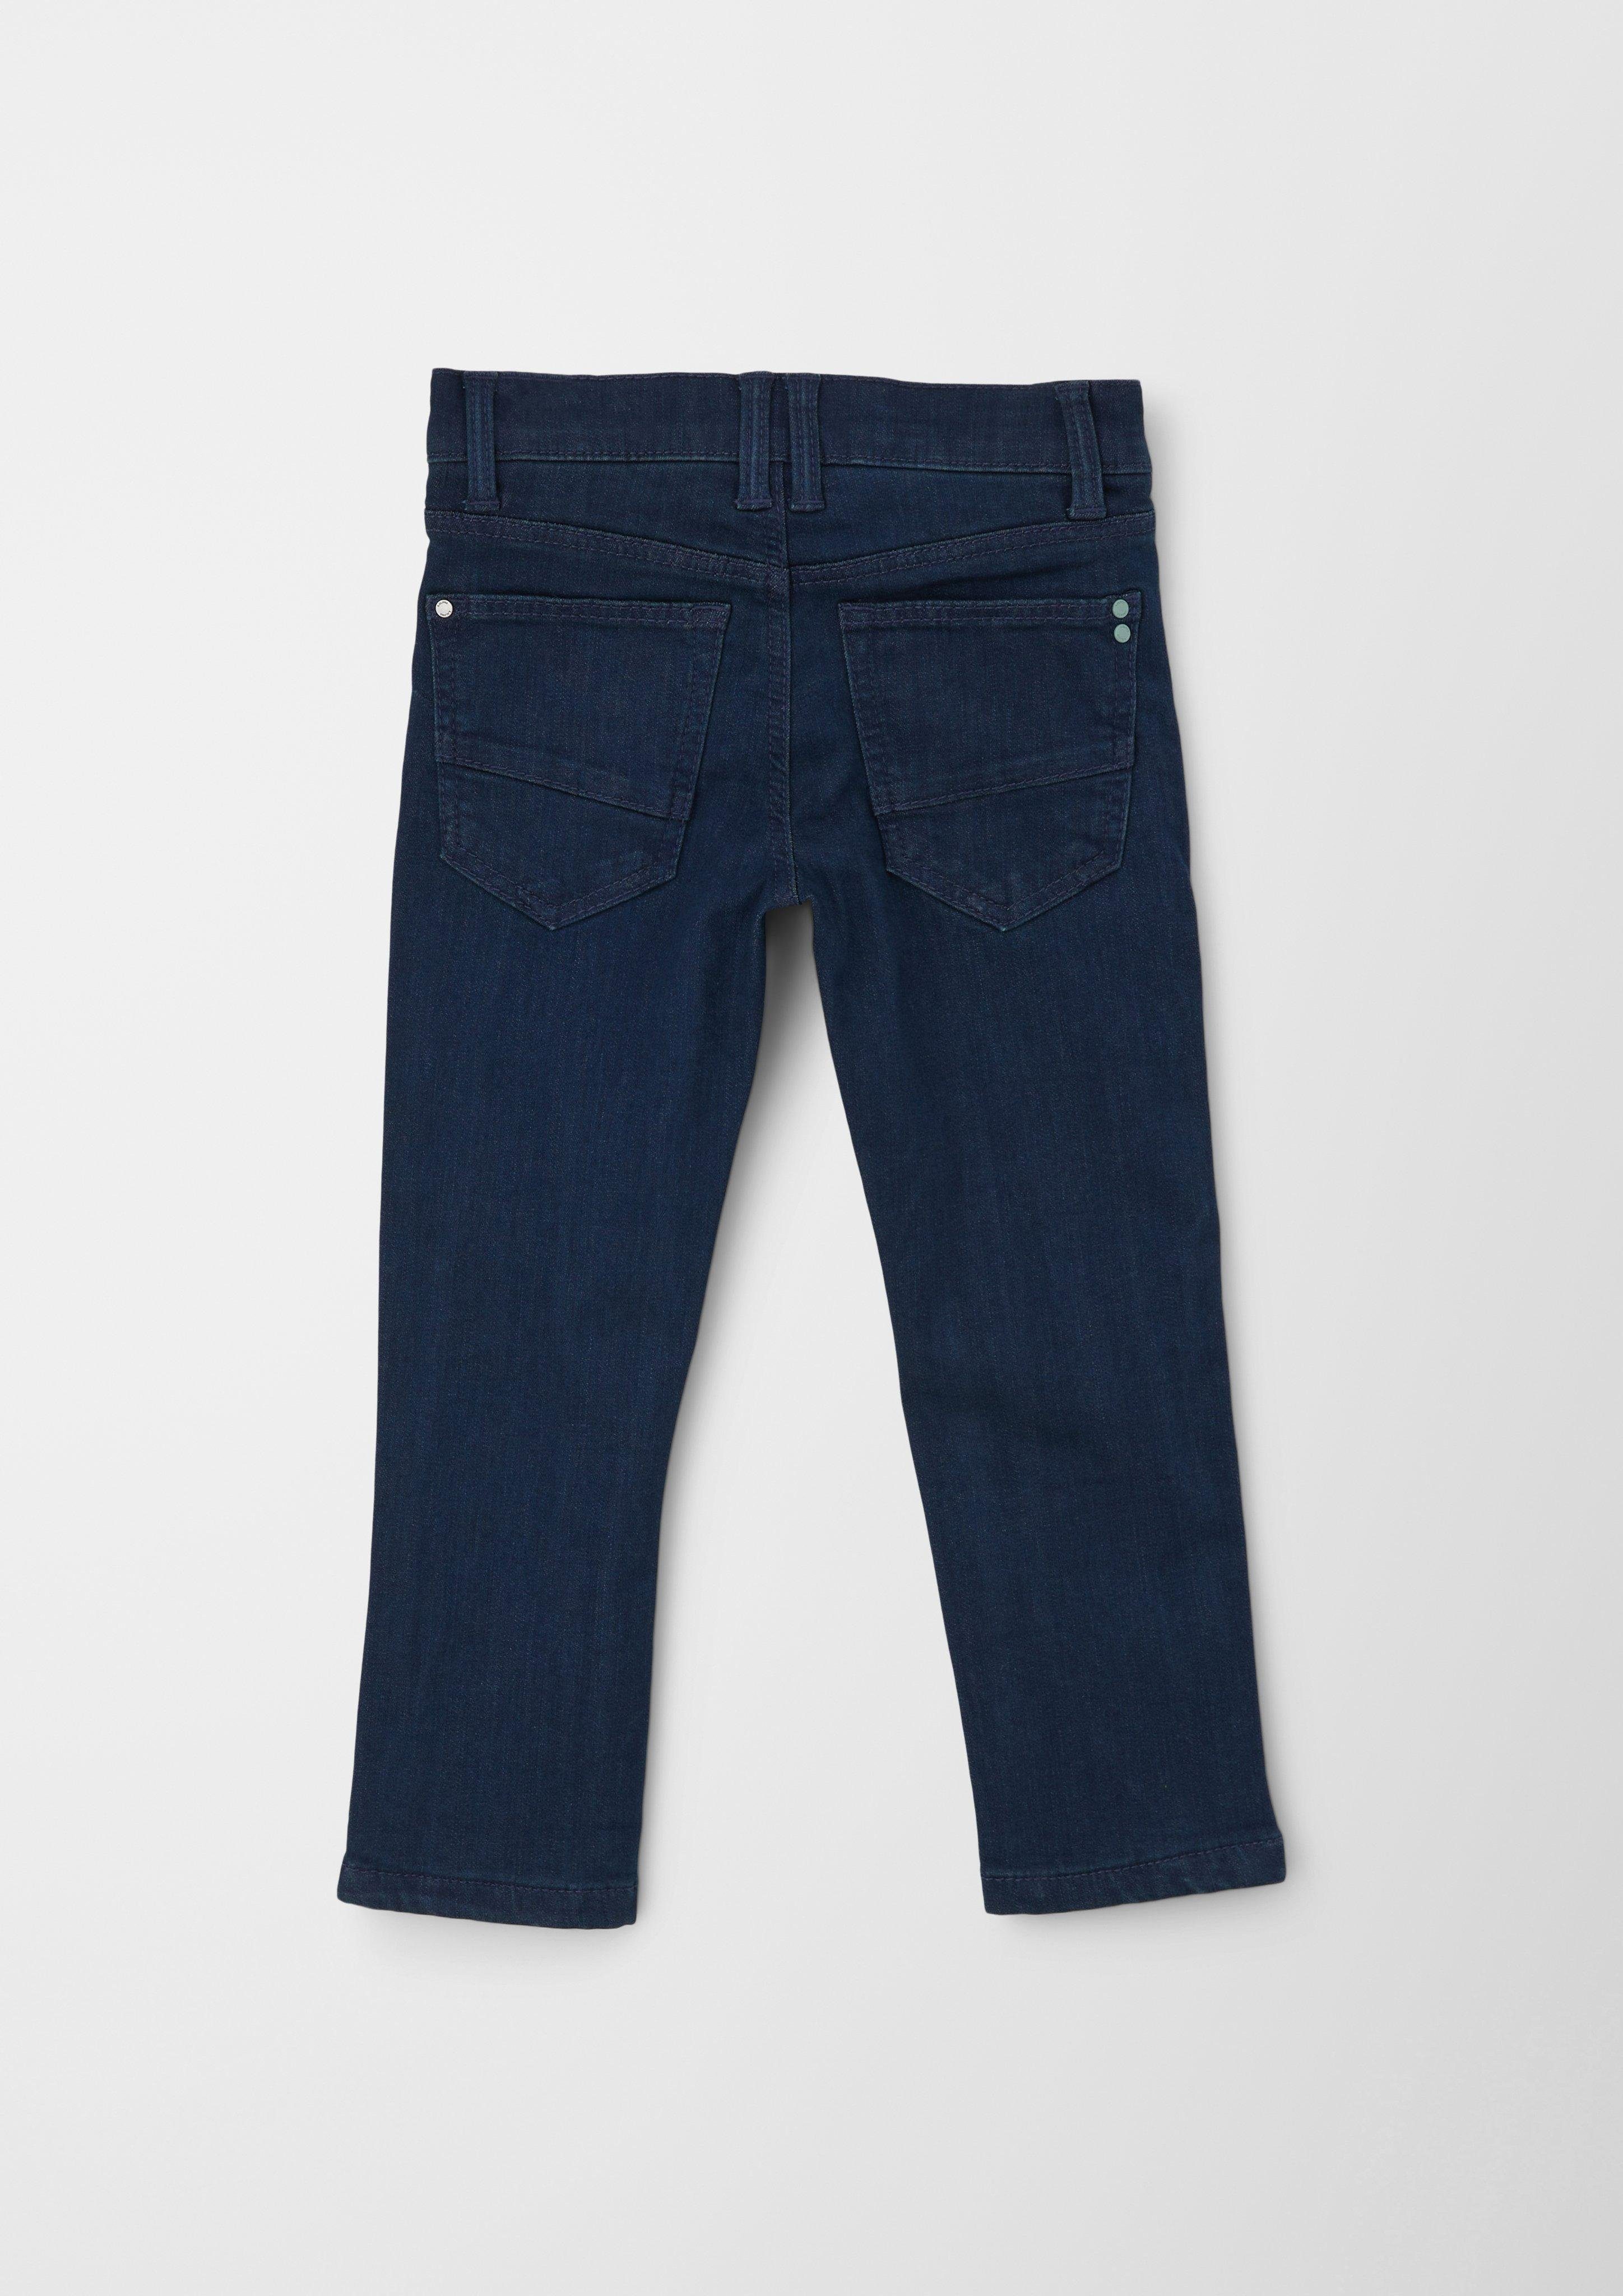 Waschung Rise Brad Leg s.Oliver / / Slim Fit Slim / 5-Pocket-Jeans Jeans Mid